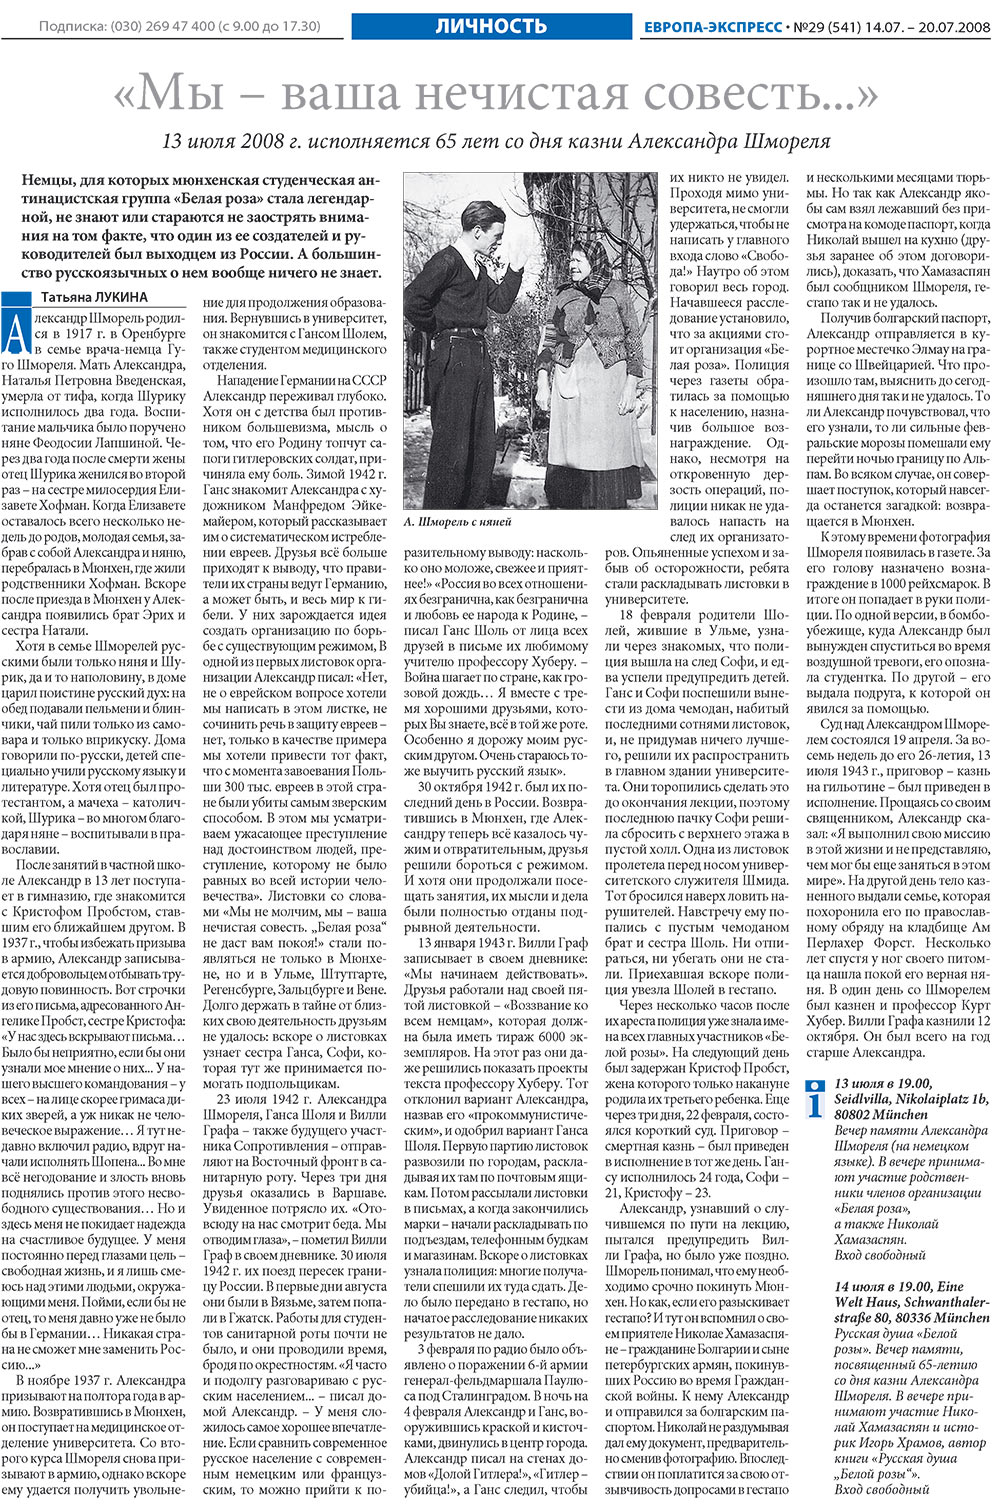 Европа экспресс, газета. 2008 №29 стр.17